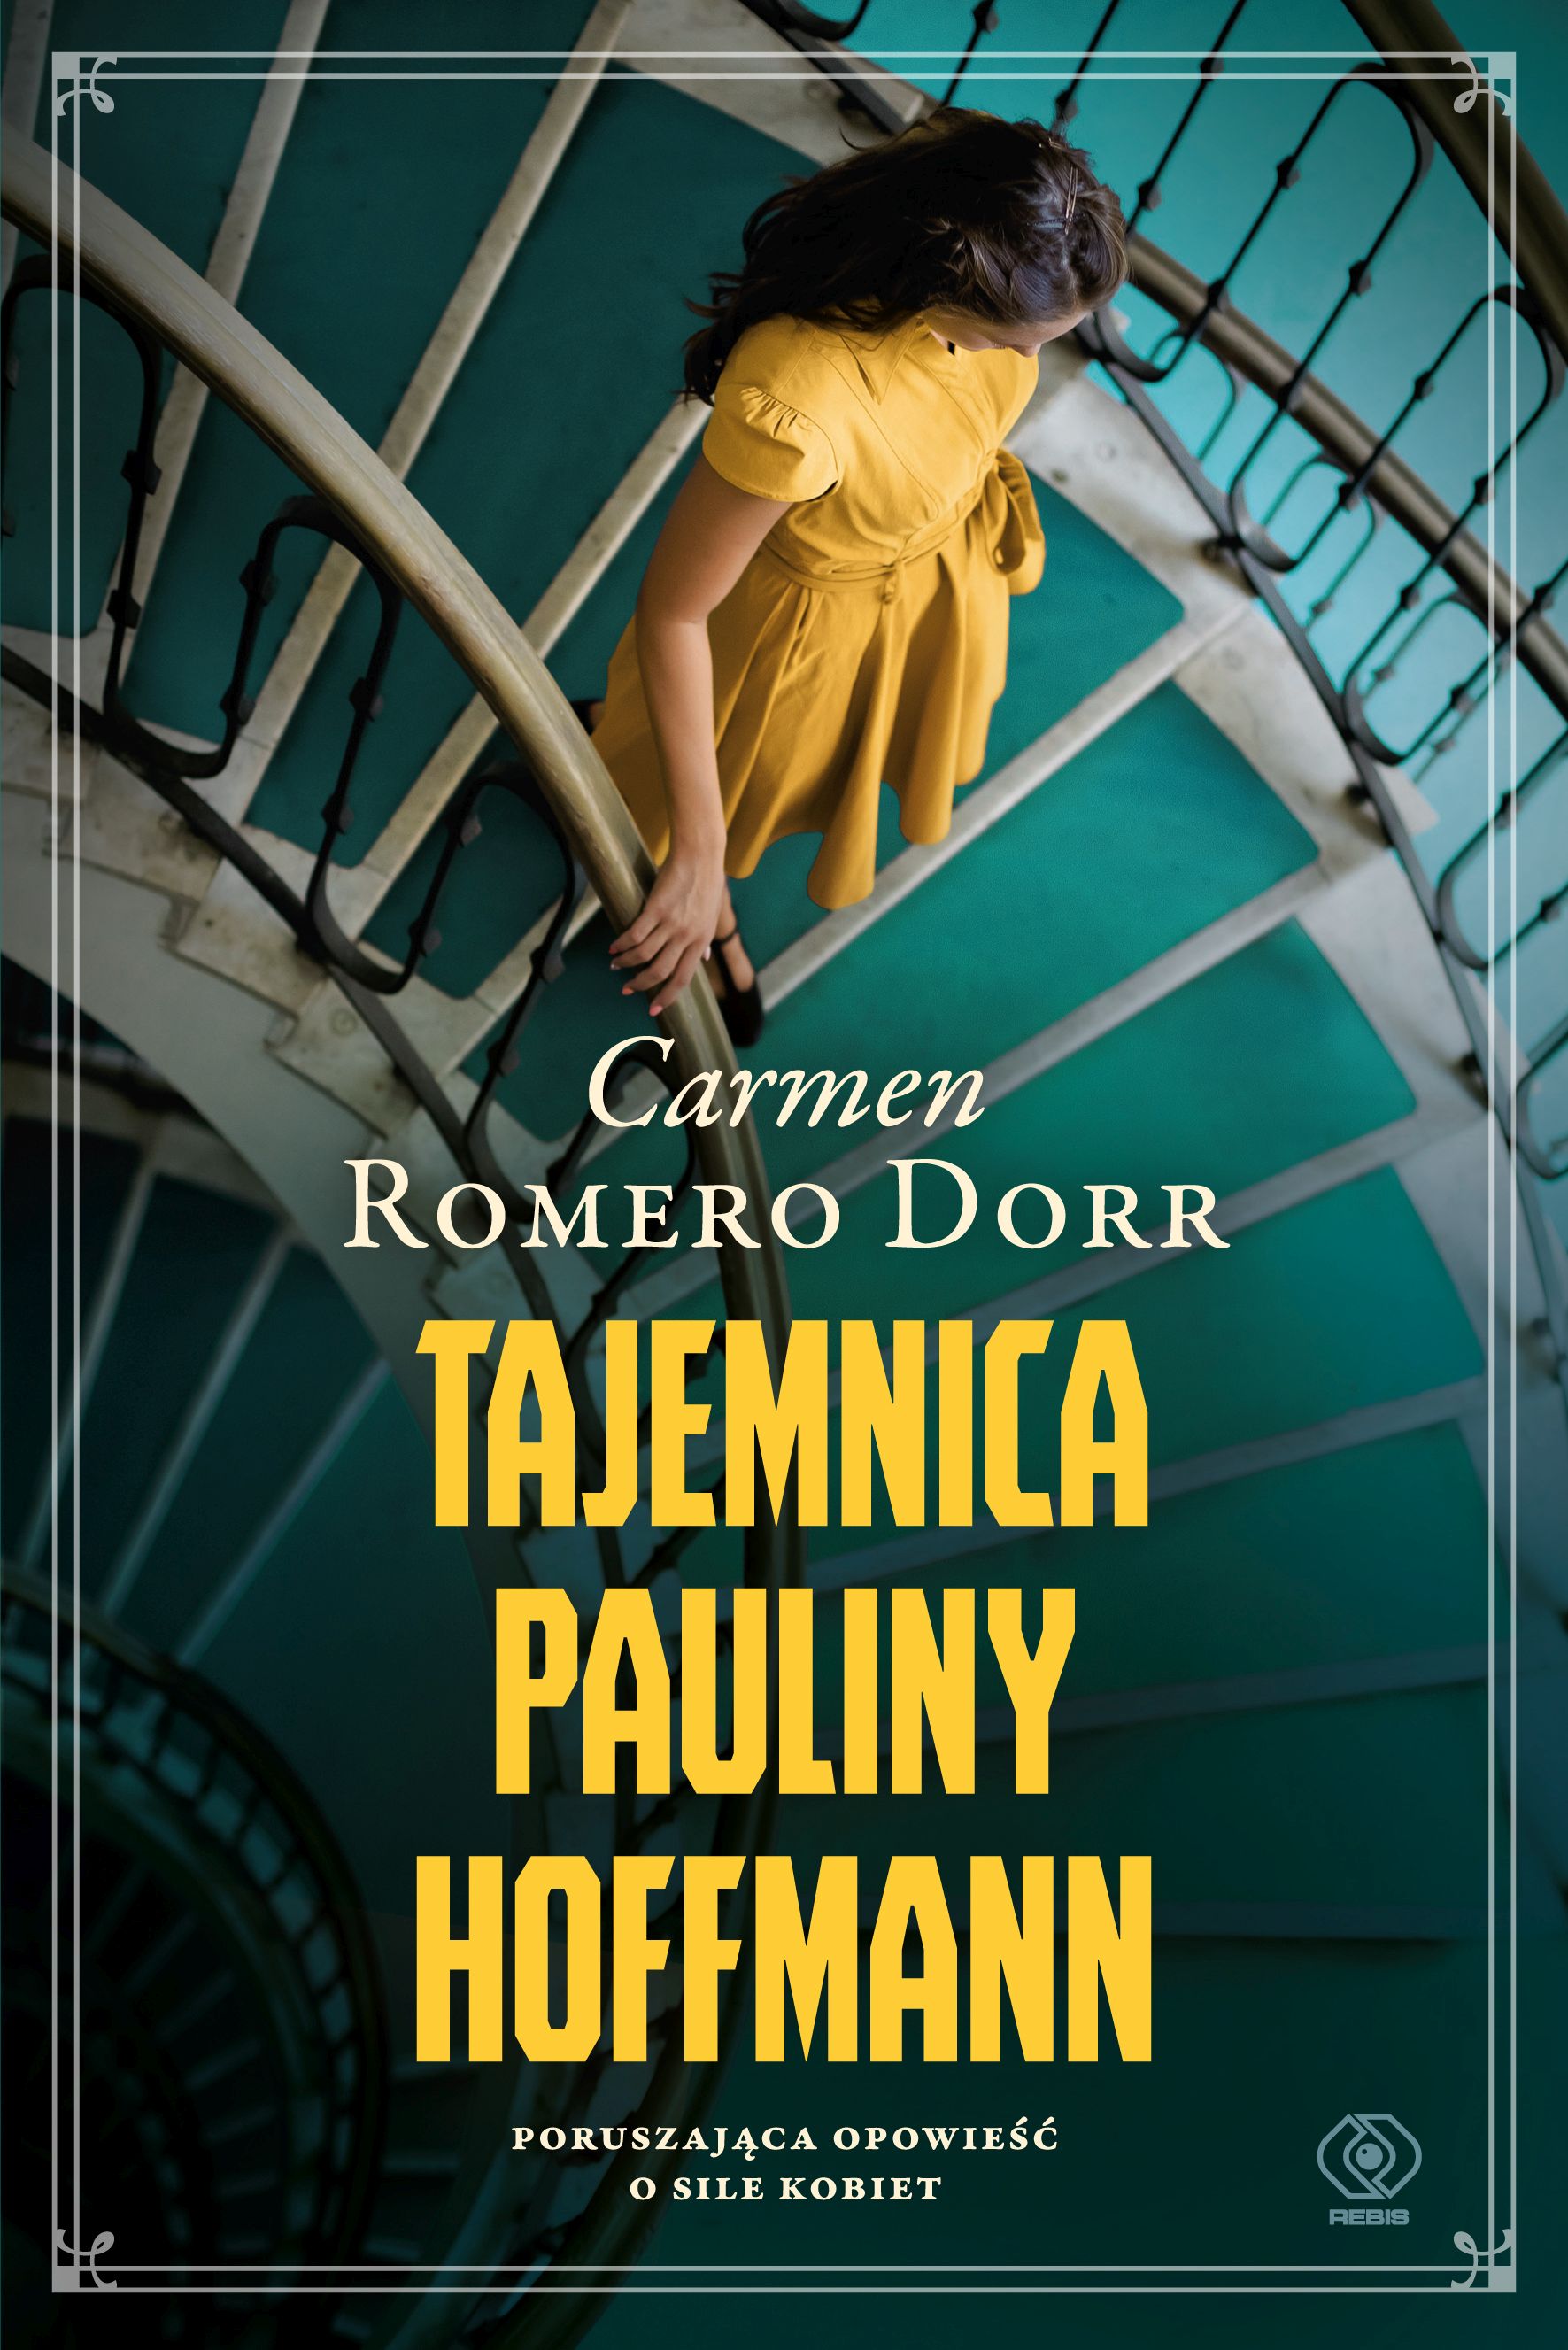  "Tajemnica Pauliny Hoffmann", Carmen Romerro Dorr!